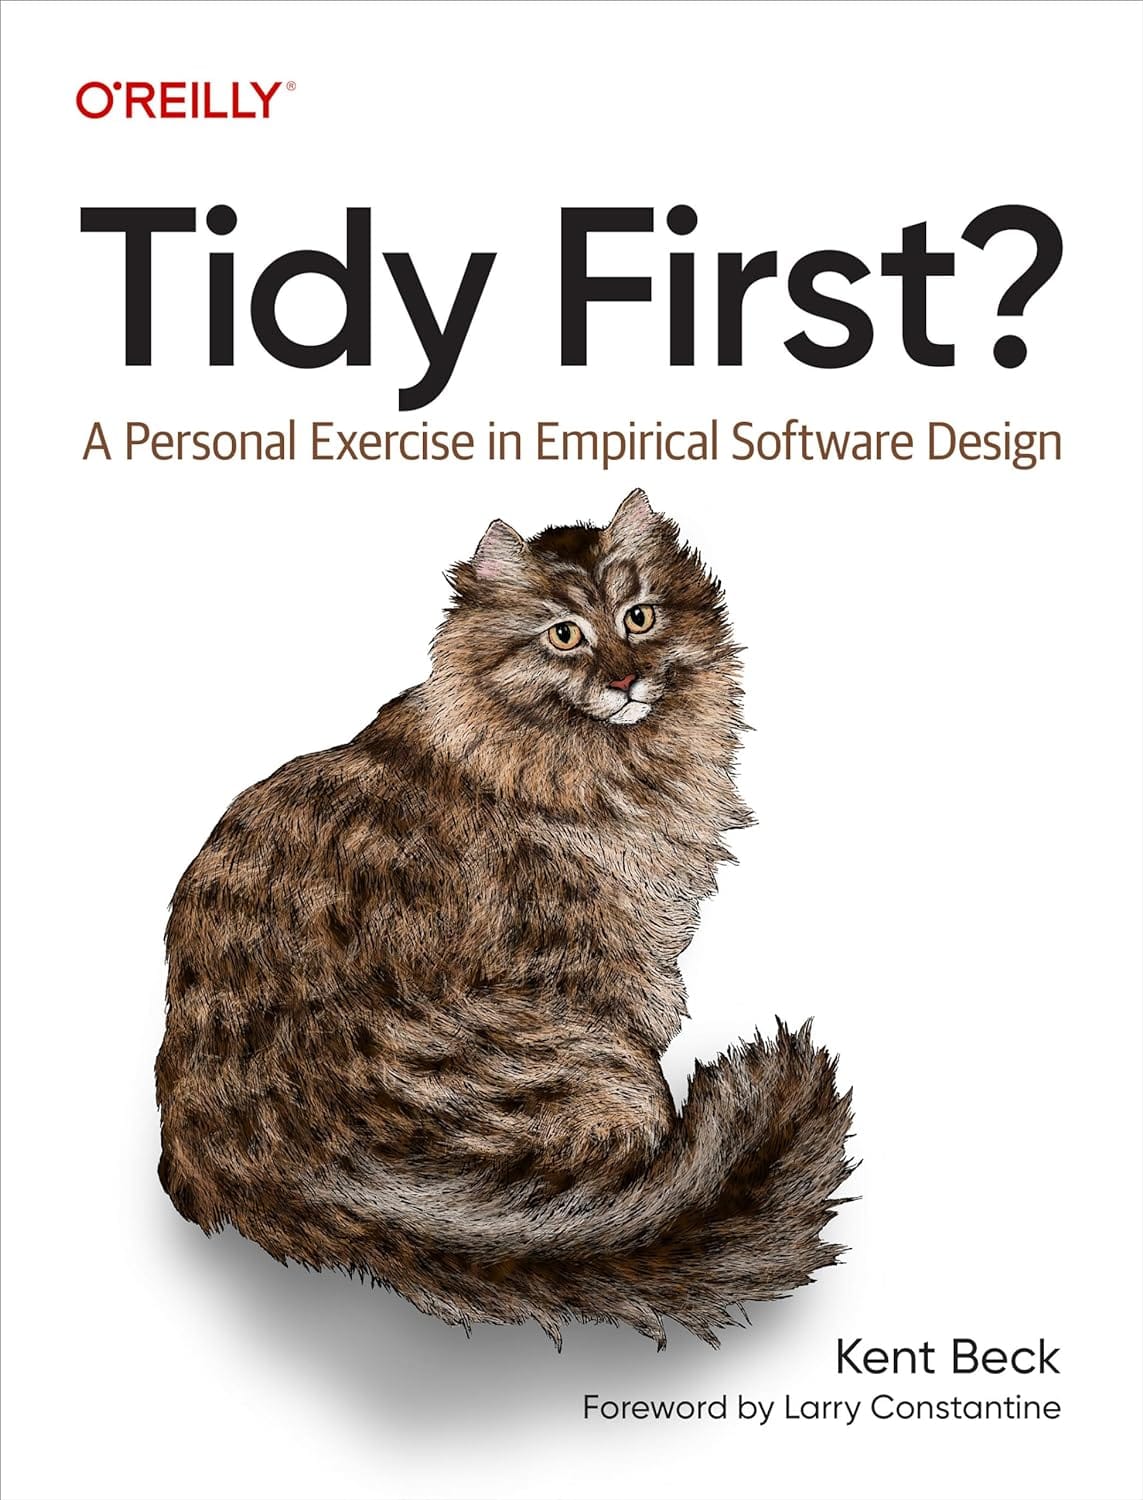 Tidy First? A Summary of Kent Beck's Book on Empirical Software Design